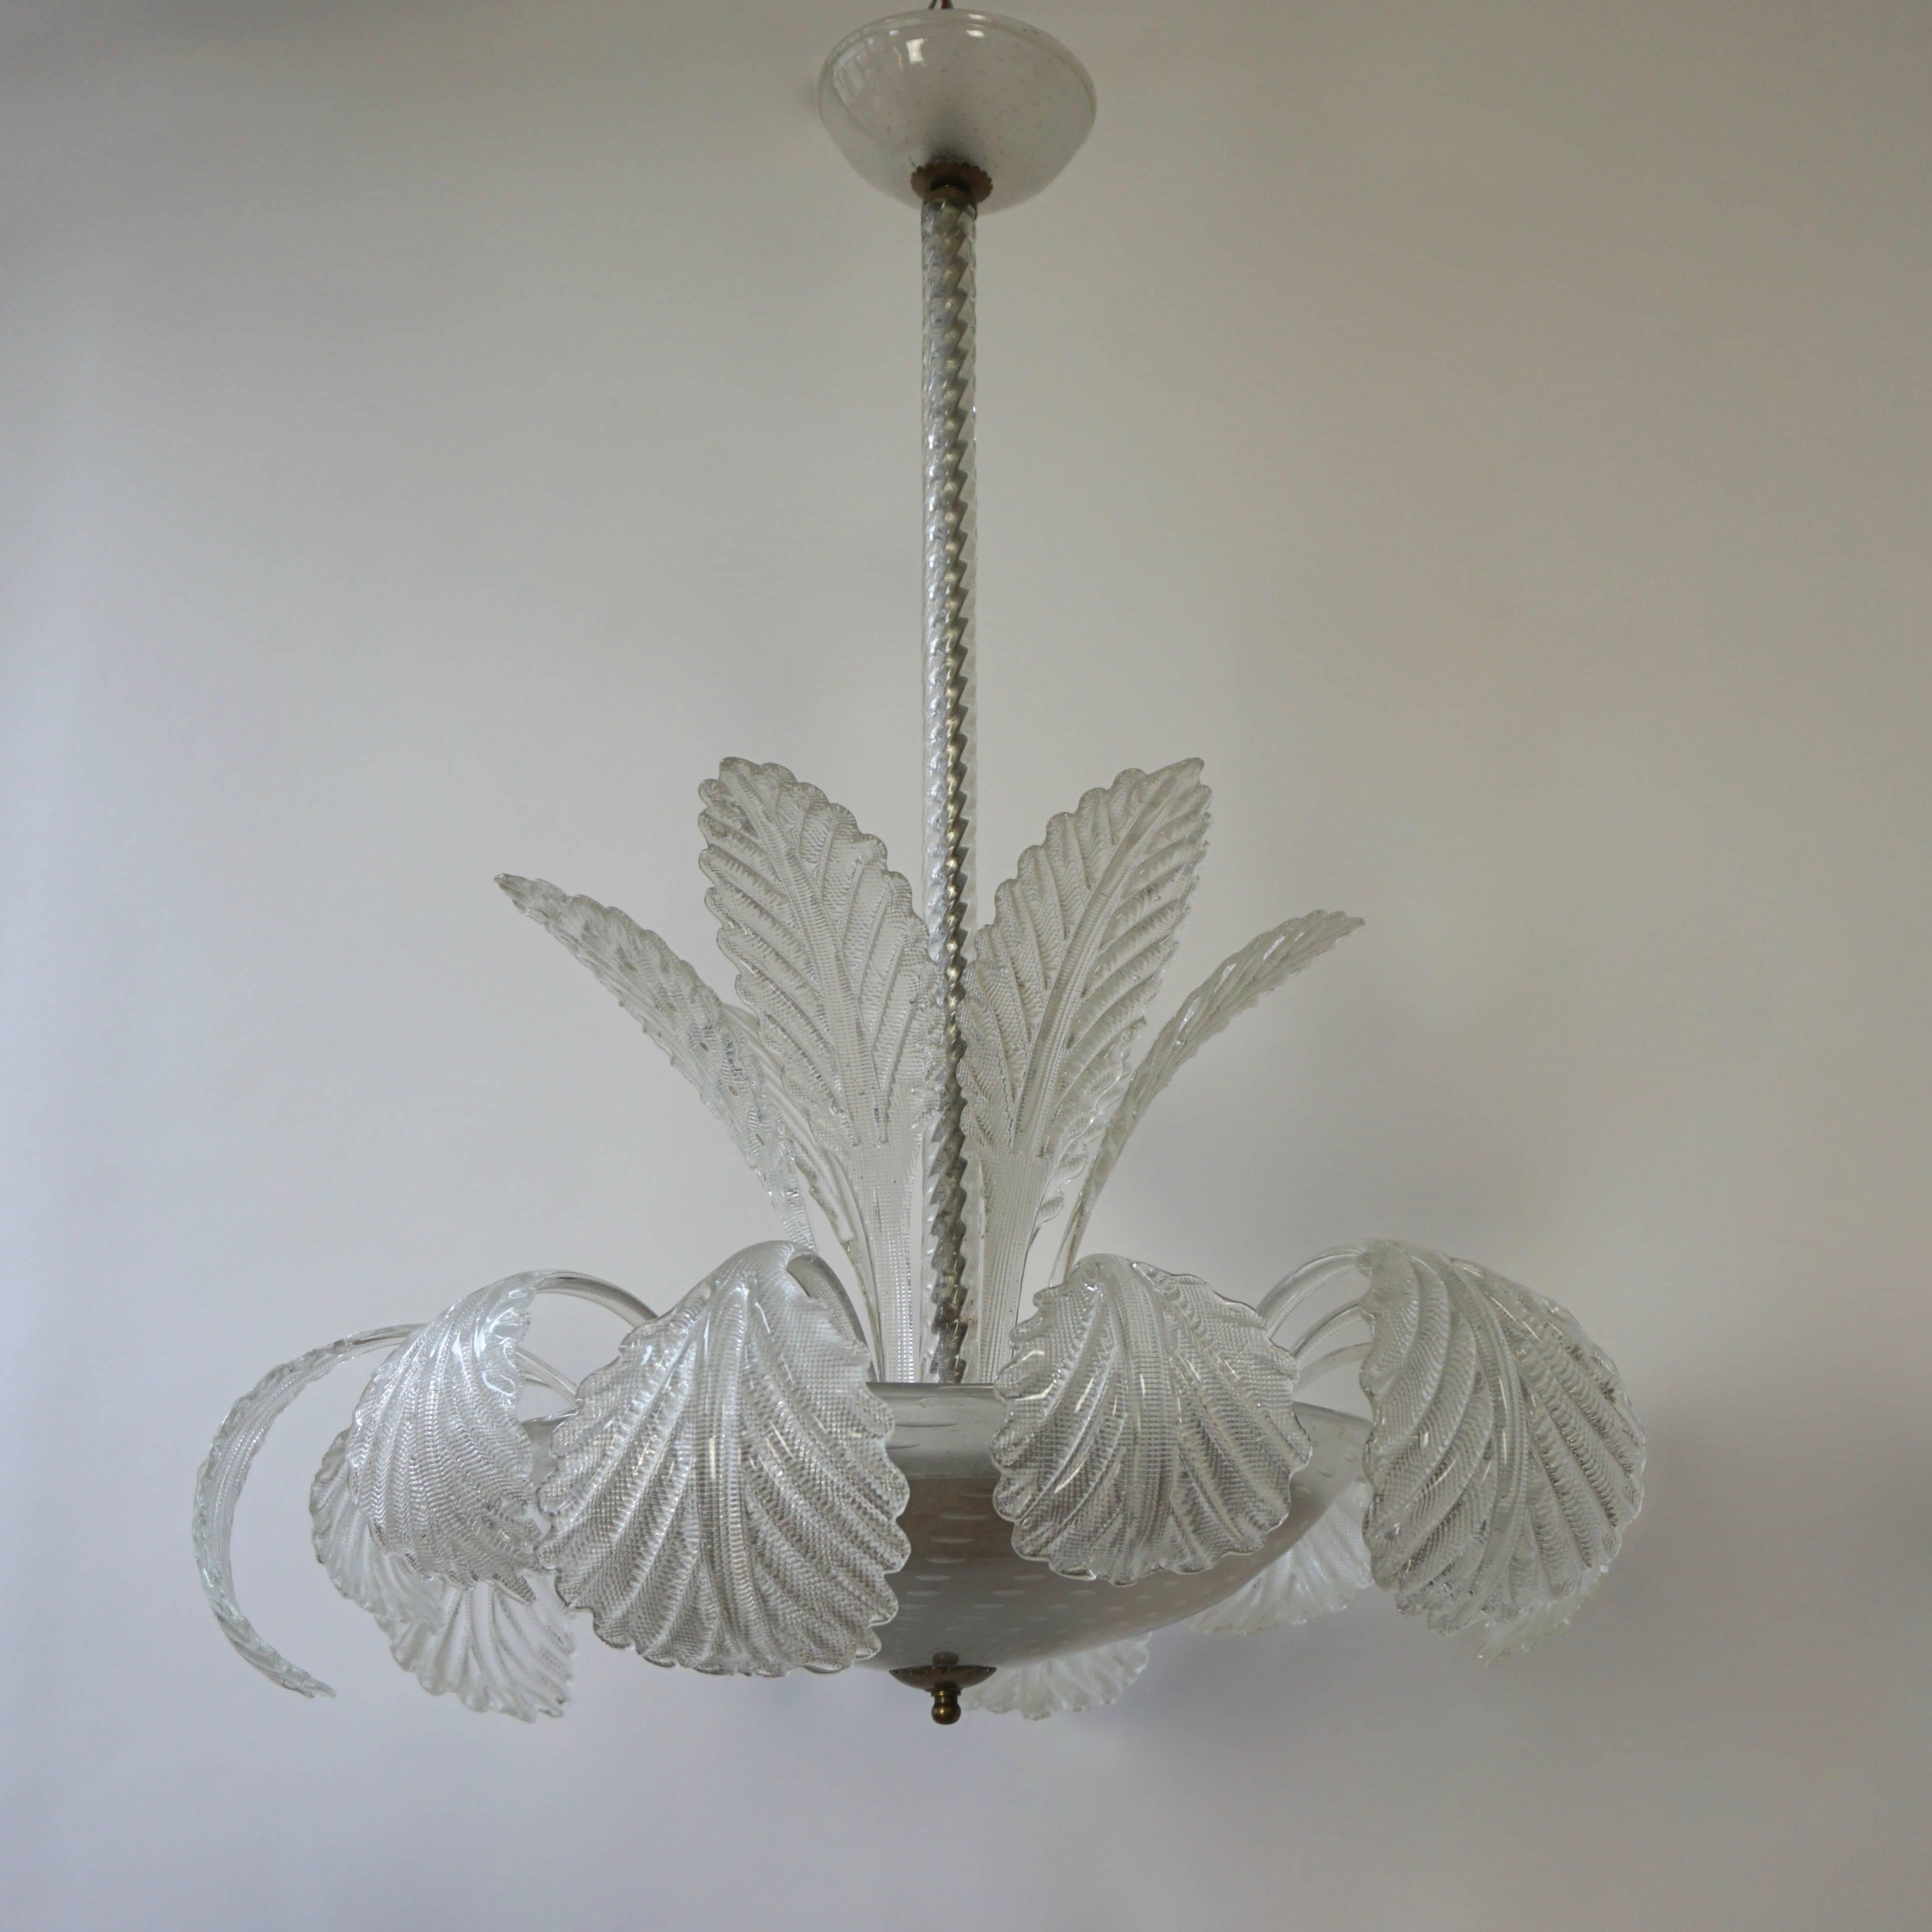 Italian Murano glass Venini chandelier or ceiling light.

Diameter 68 cm.
Height 90 cm.

The light requires 3 single E27 screw fit lightbulbs (60Watt max.) LED compatible.
